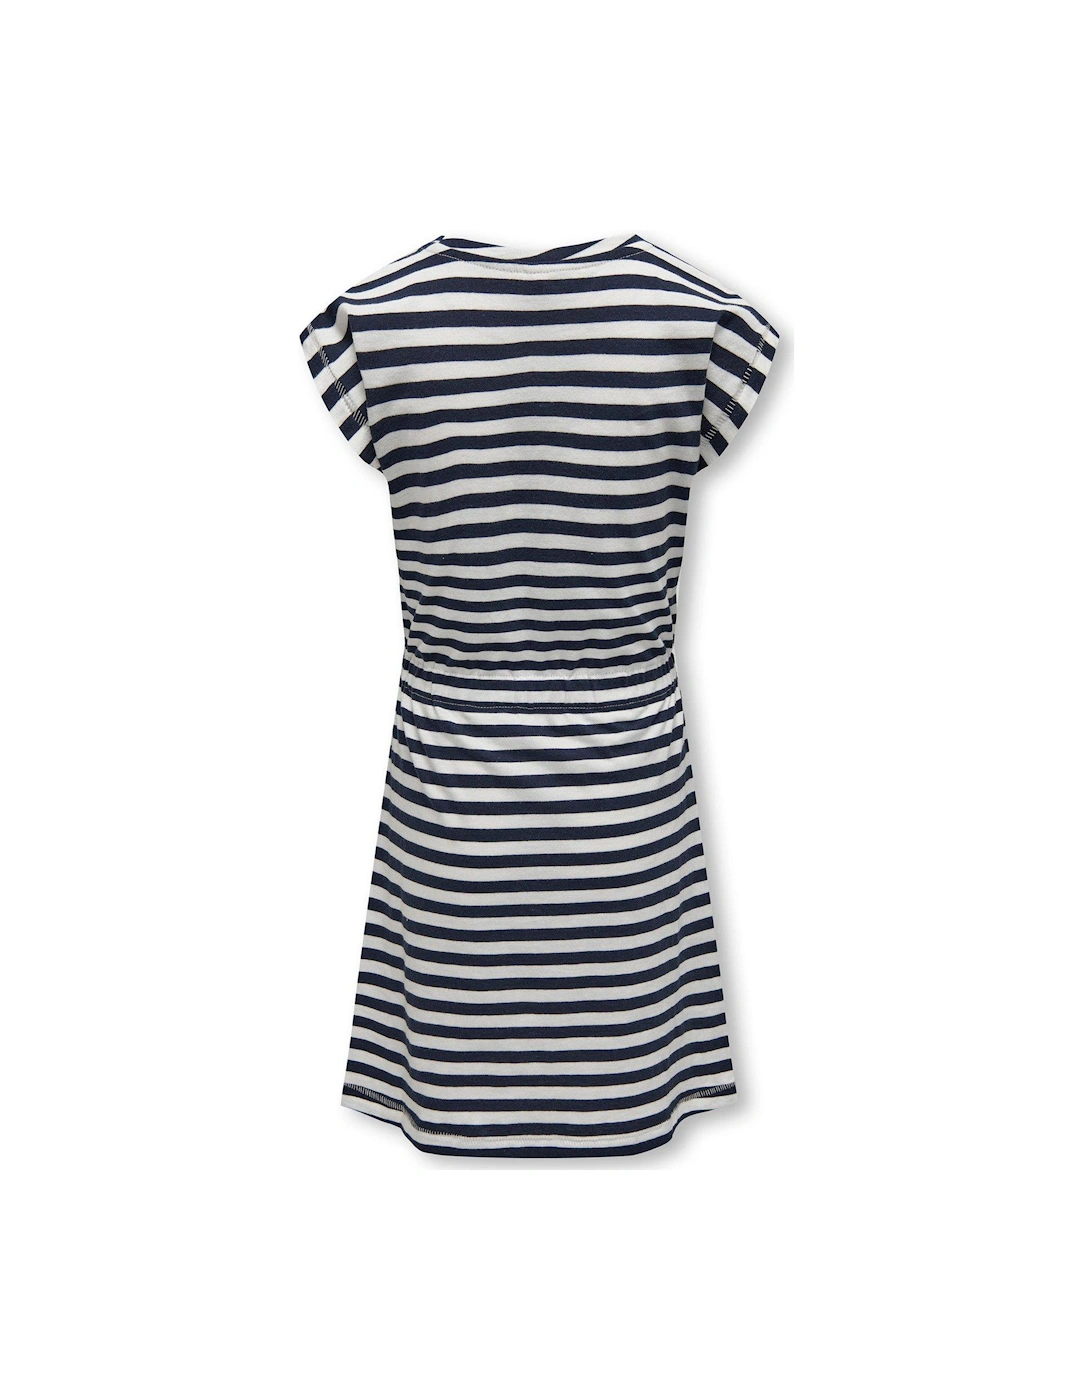 Girls May Short Sleeve Stripe Jersey Dress - Navy Blazer/Cloud Dancer